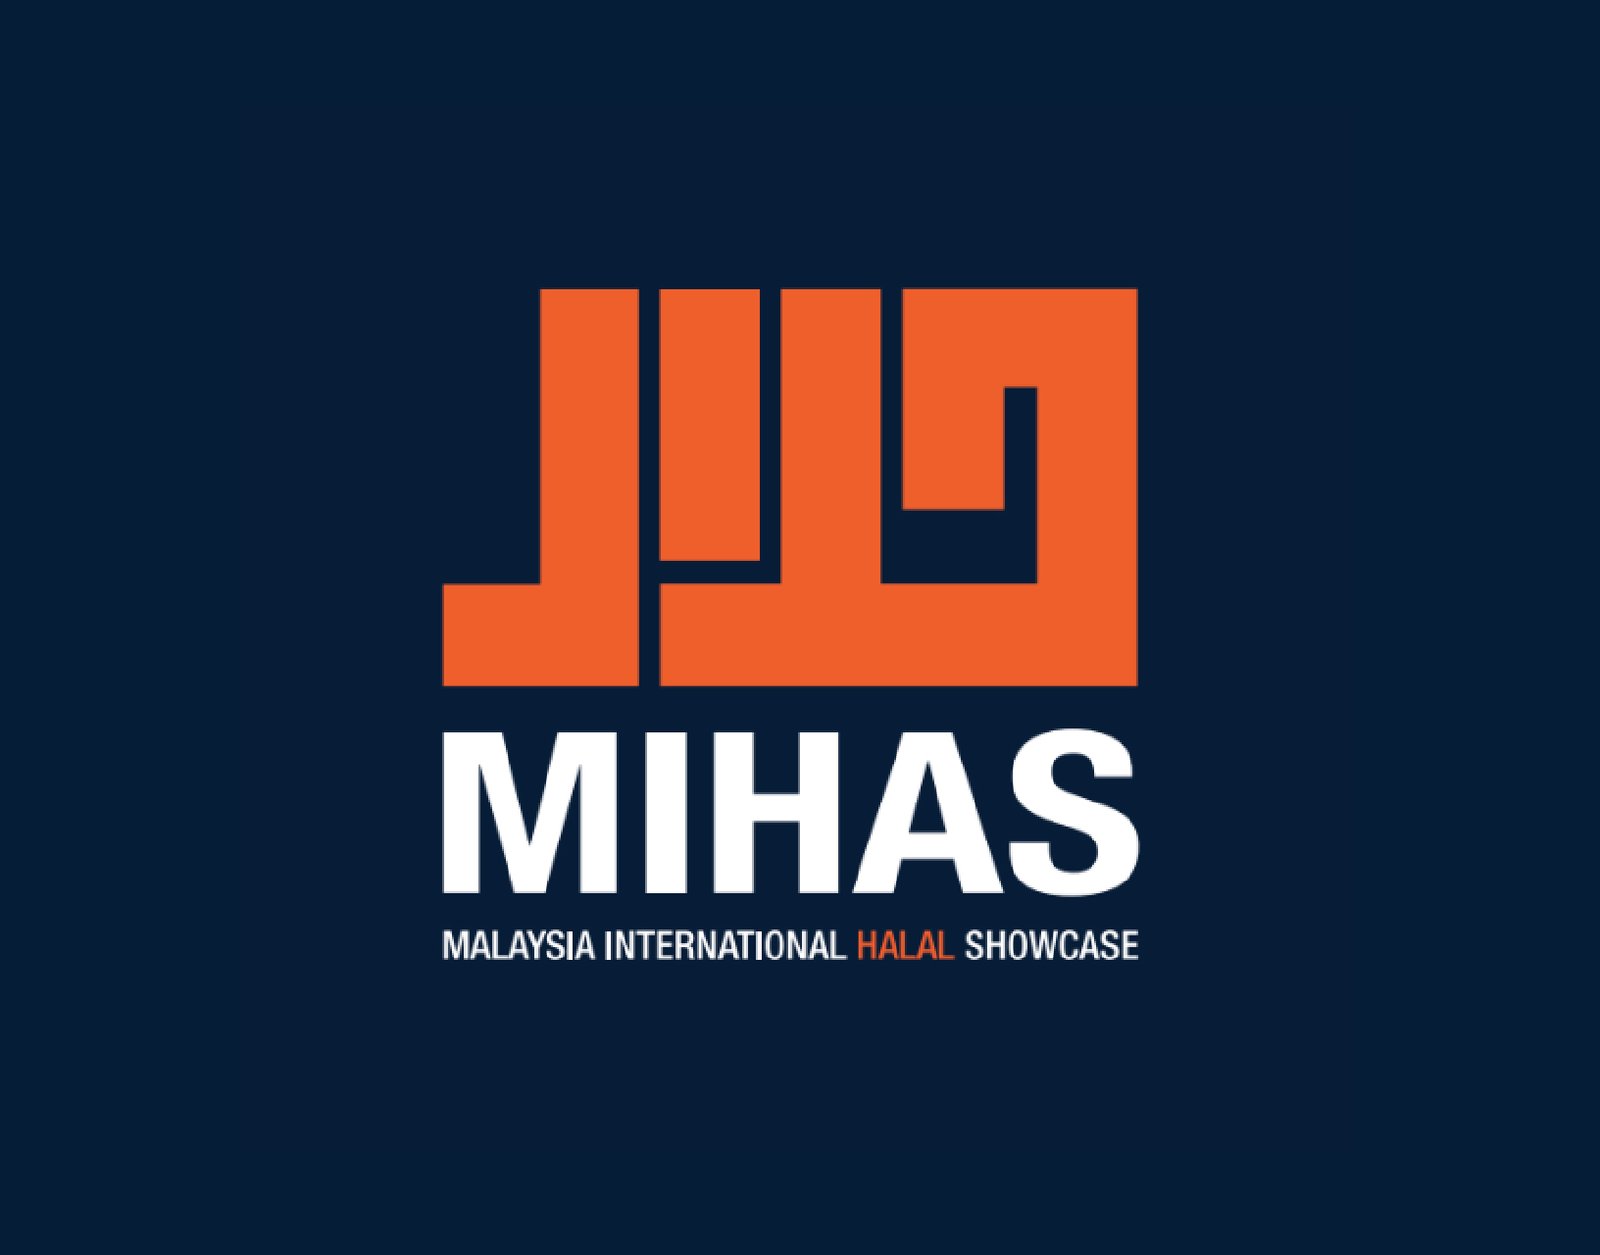 MIHAS - Malaysia International Halal Showcase